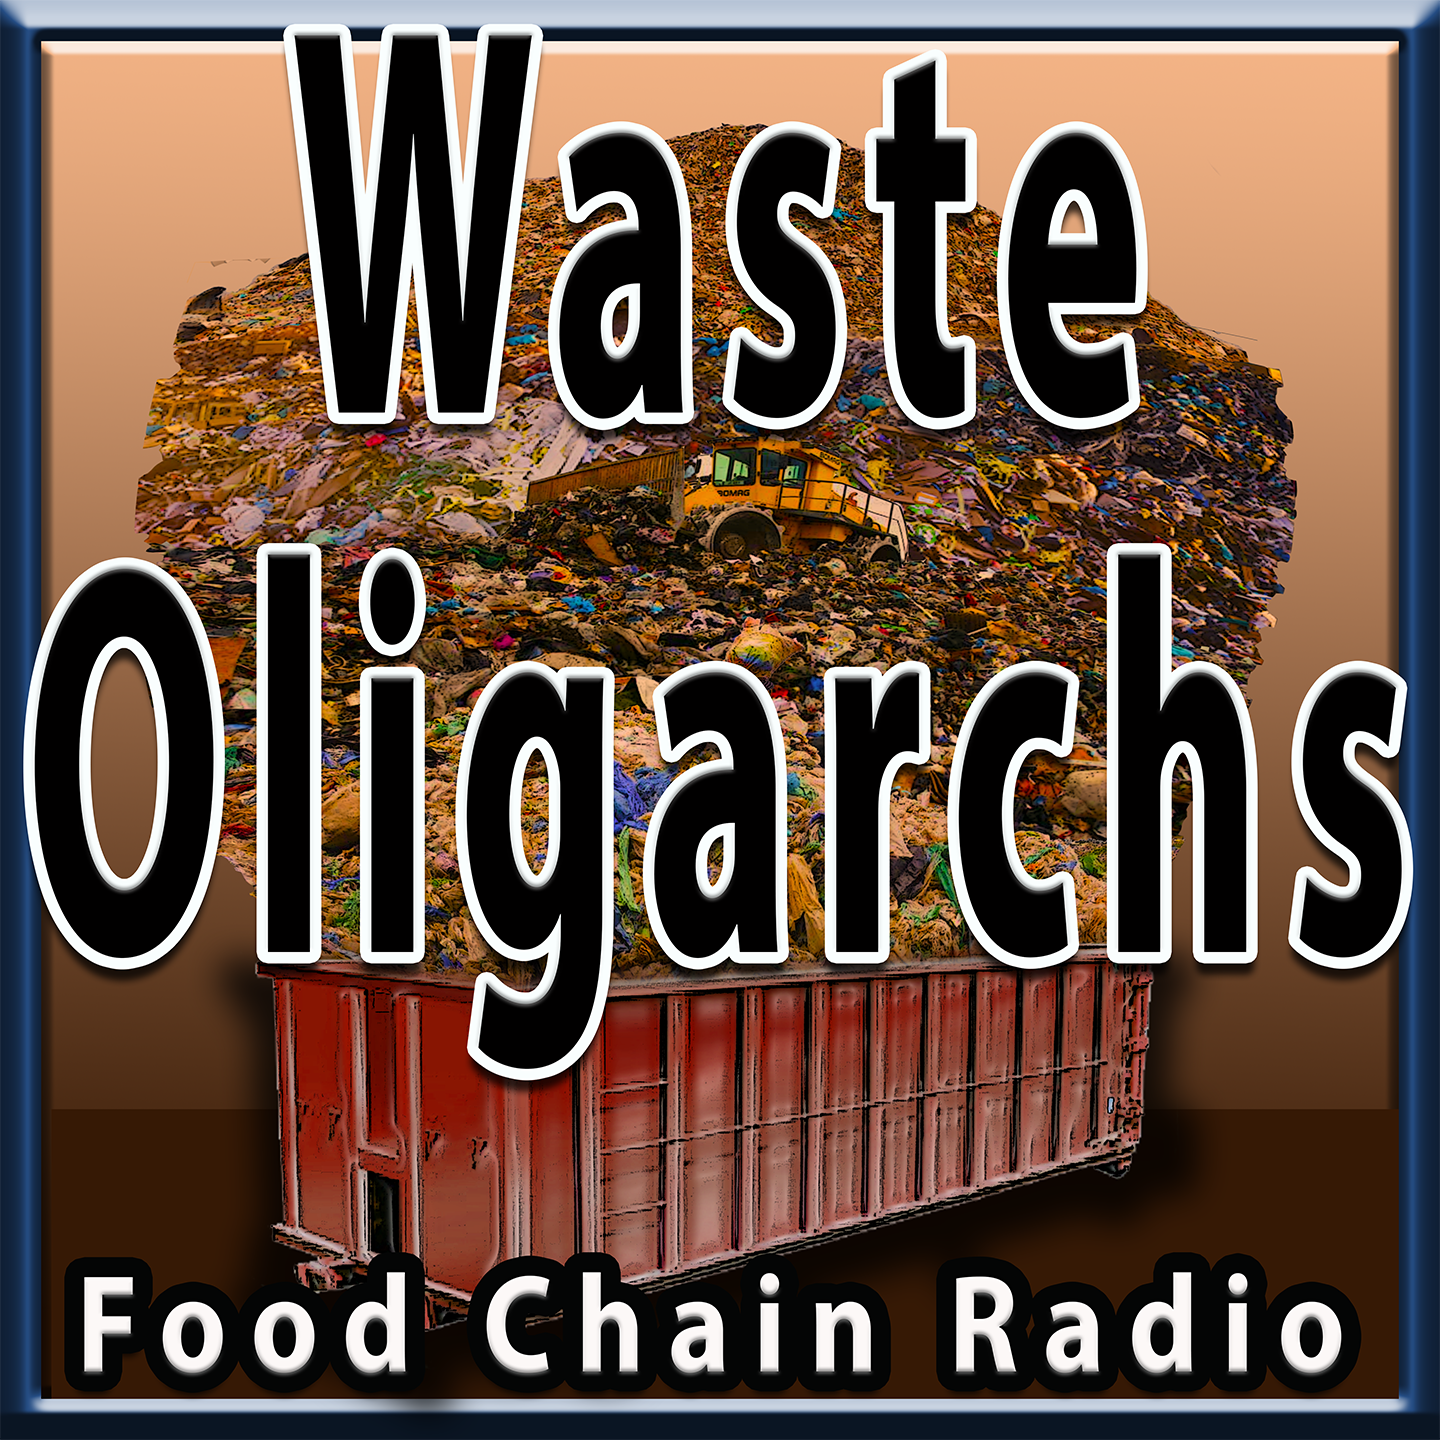 Michael Olson Food Chain Radio – Waste Oligarchs